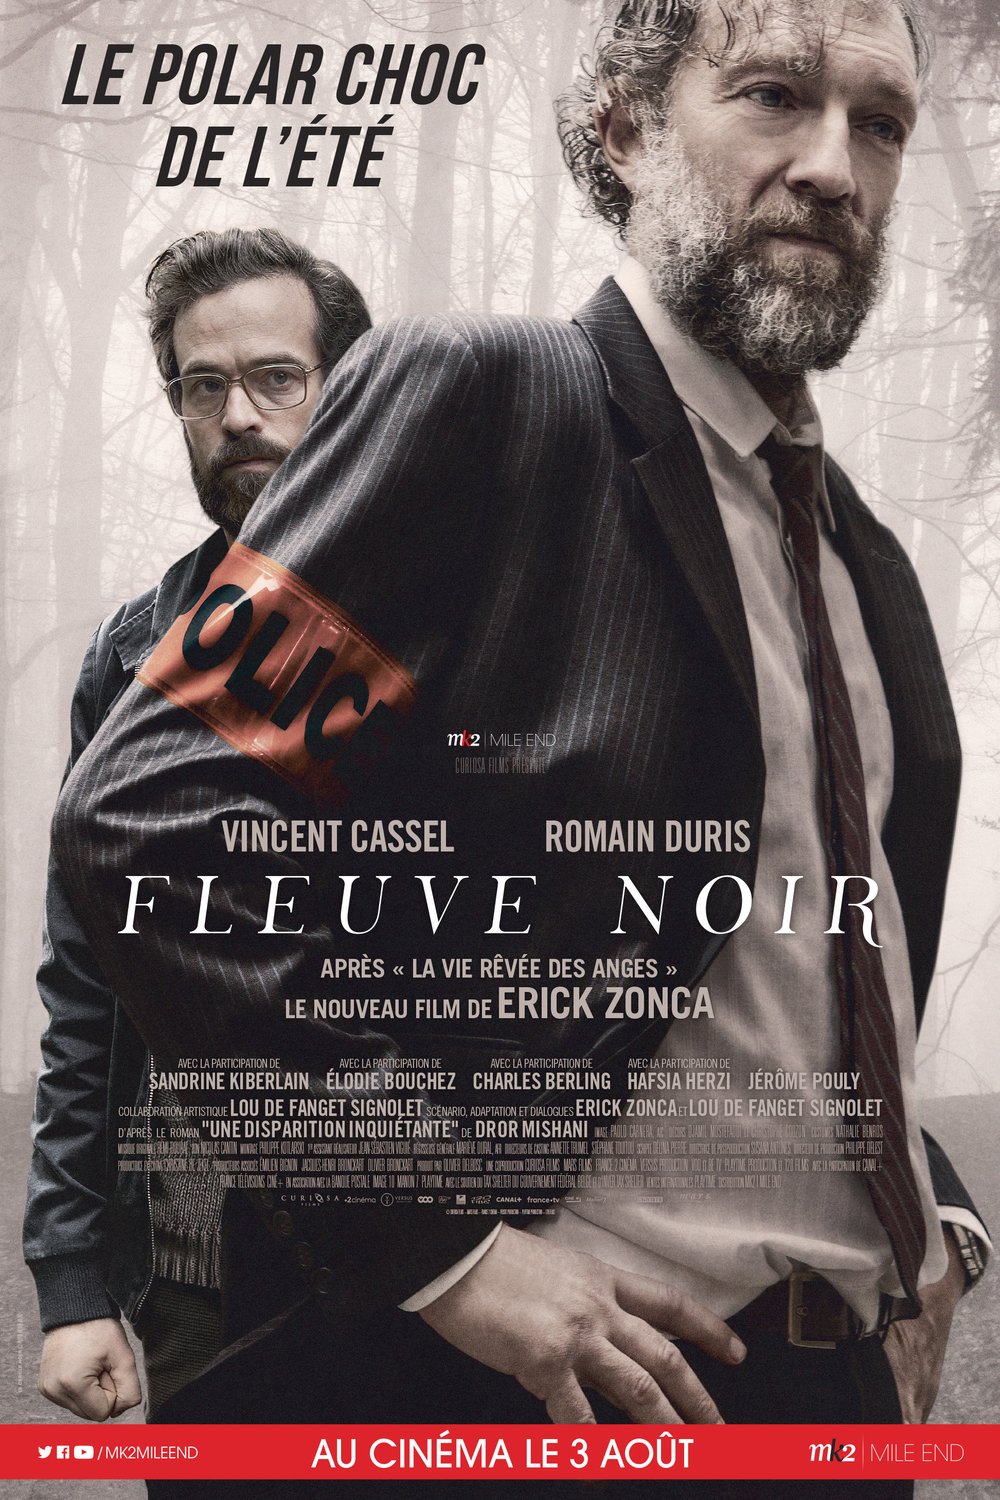 Poster of the movie Fleuve noir